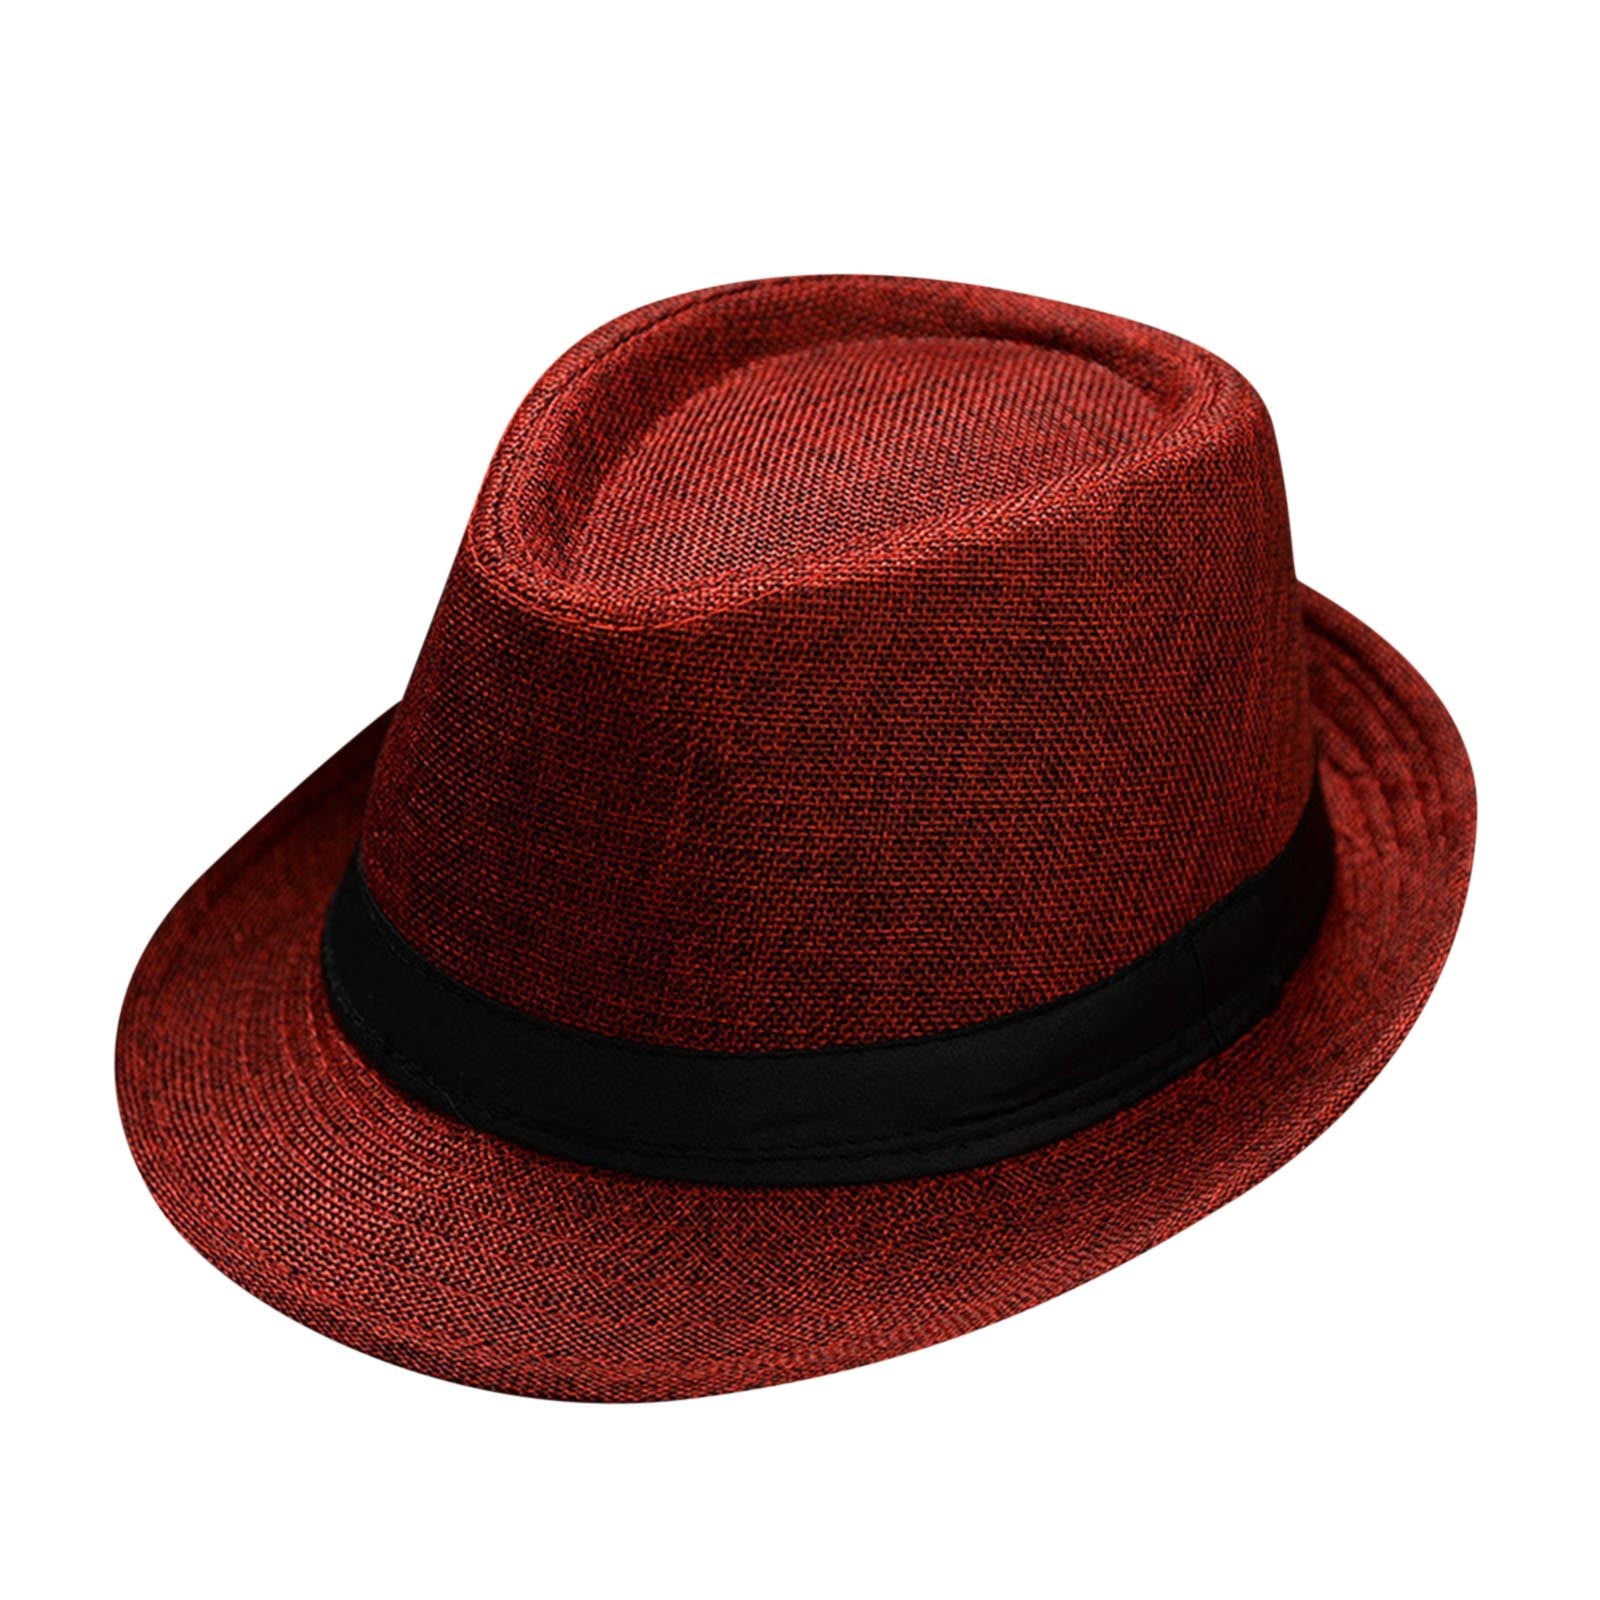 2DXuixsh Tail Up Hats Men and Women Retro Jazz Hat Soild British